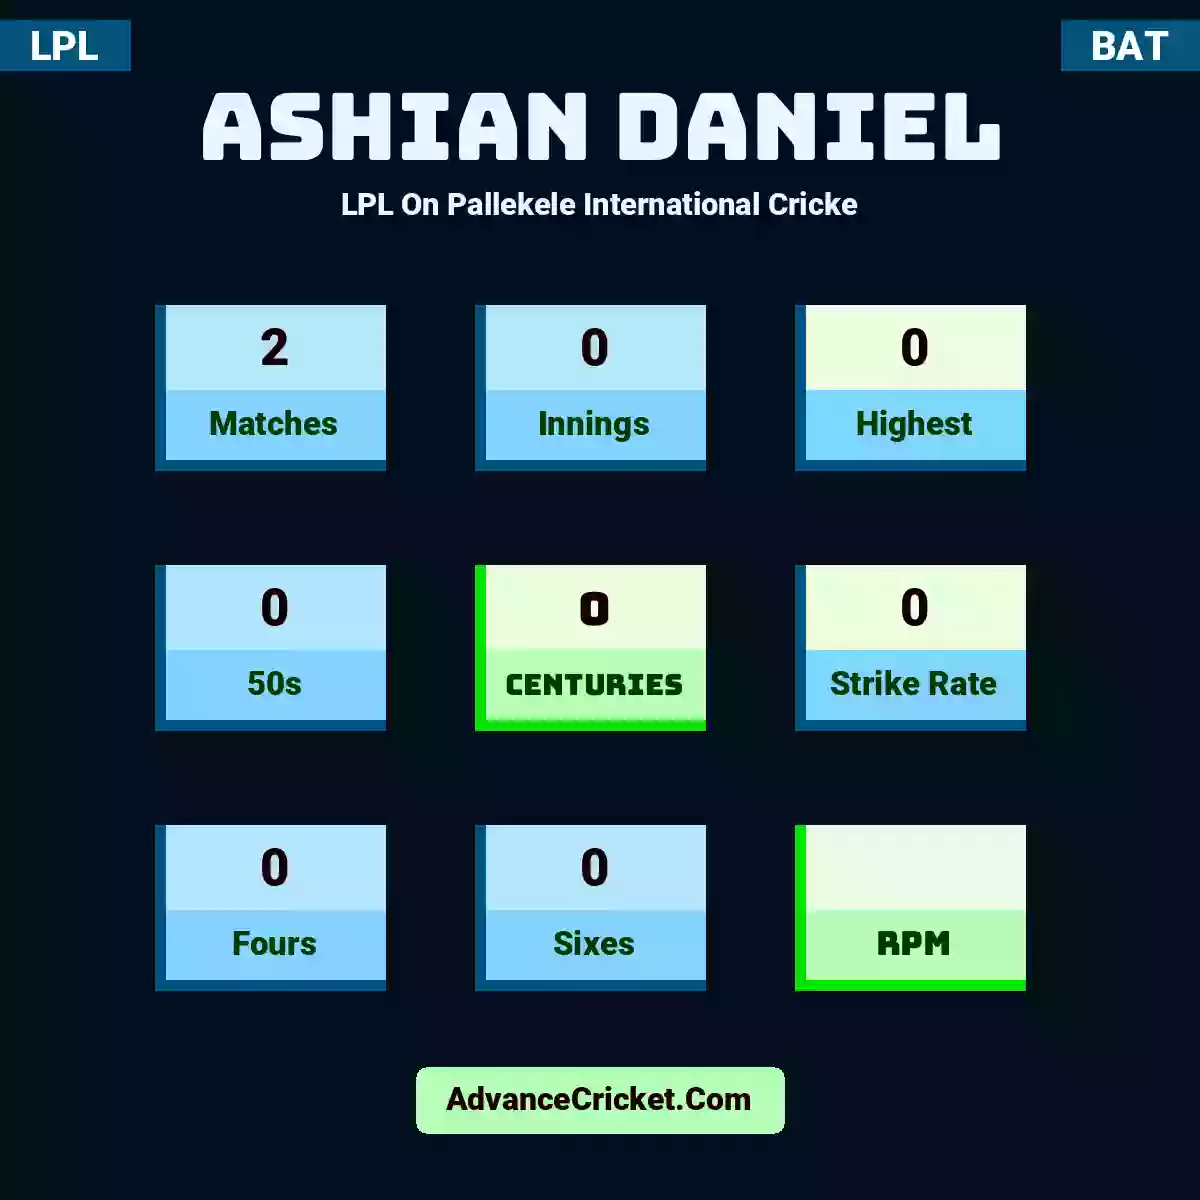 Ashian Daniel LPL  On Pallekele International Cricke, Ashian Daniel played 2 matches, scored 0 runs as highest, 0 half-centuries, and 0 centuries, with a strike rate of 0. A.Daniel hit 0 fours and 0 sixes.